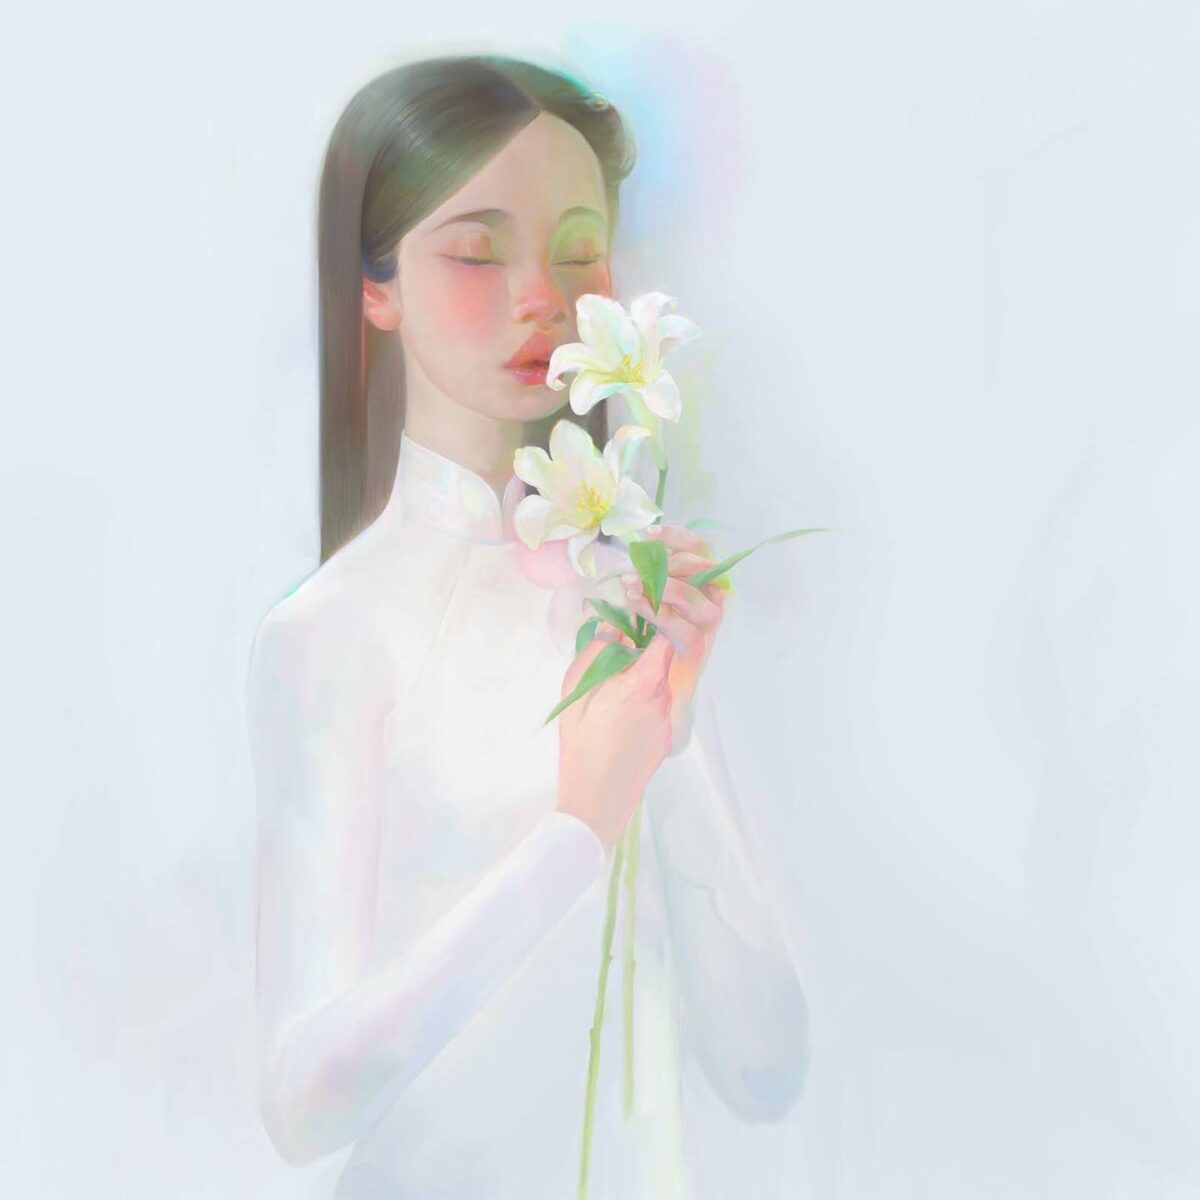 Ethereal Girls Delicate Digital Paintings Of Thanh Nhan 10